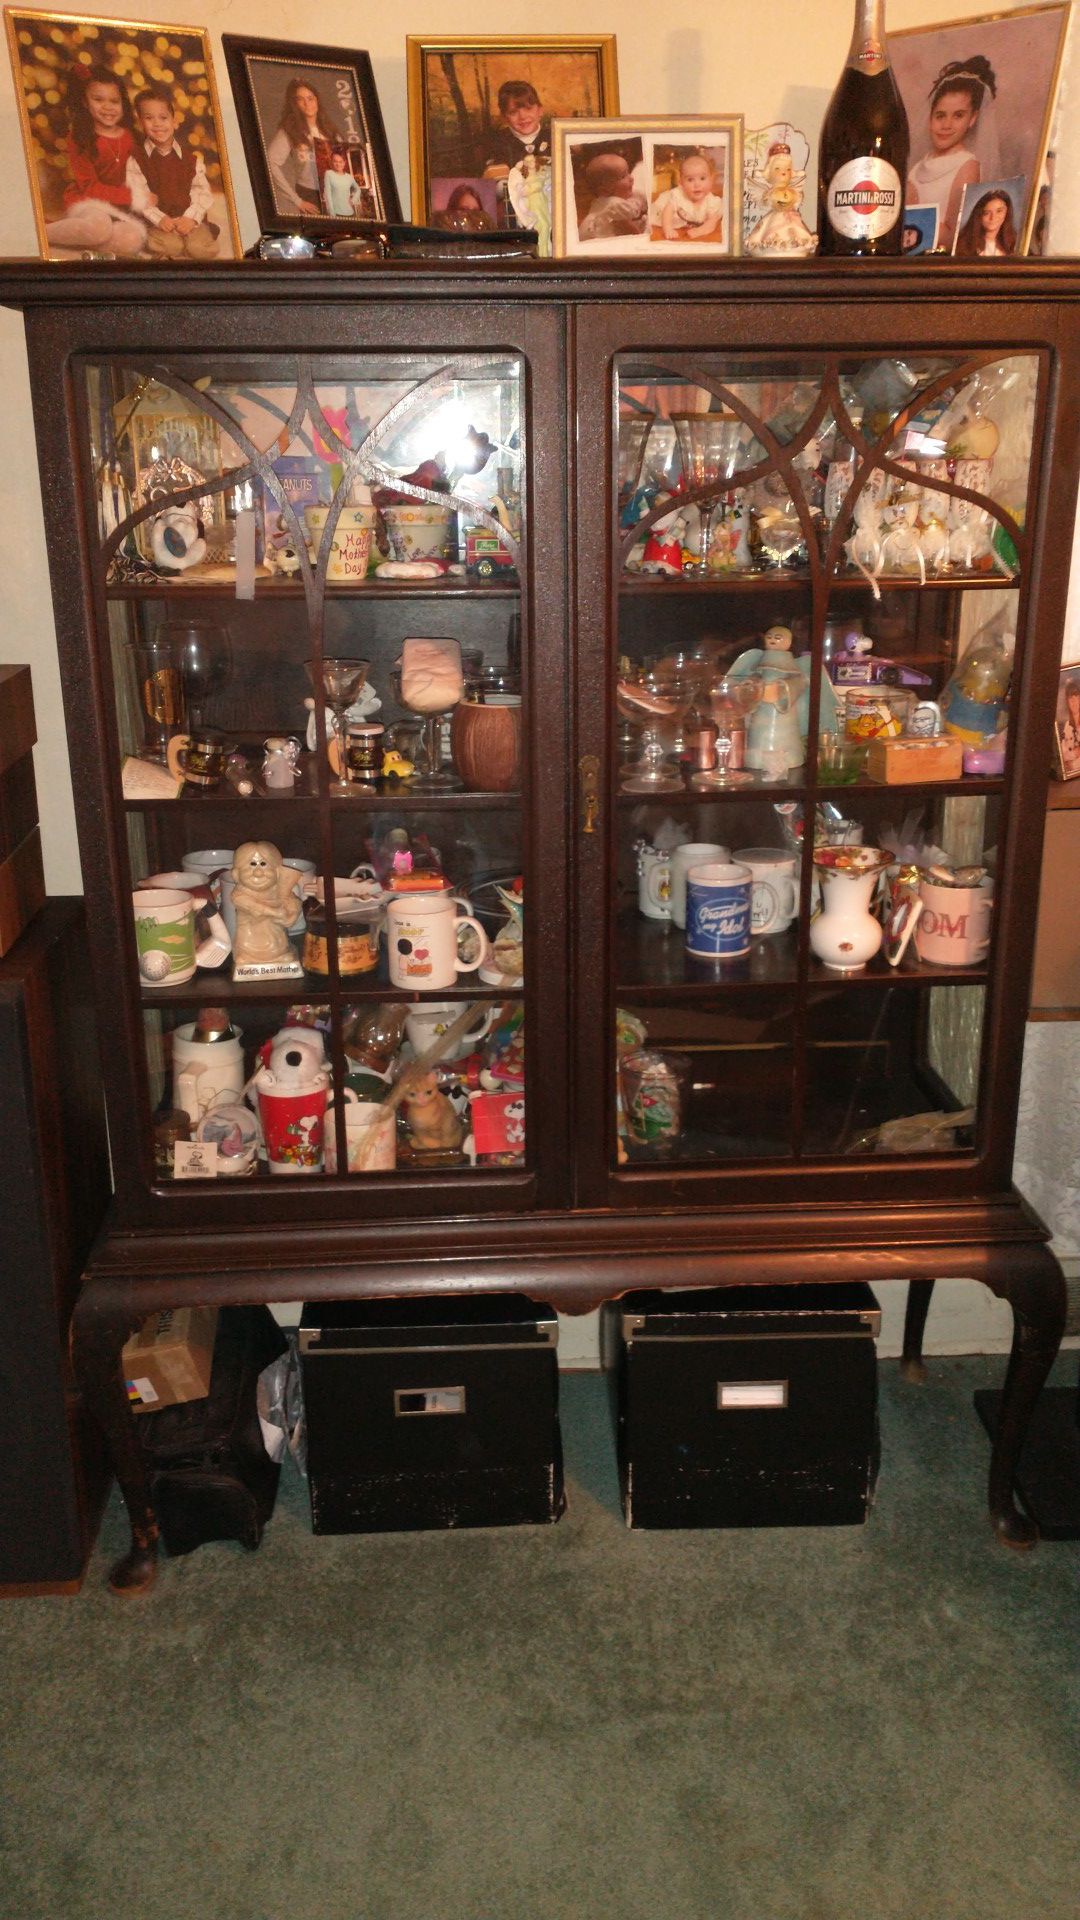 Antique china cabinet